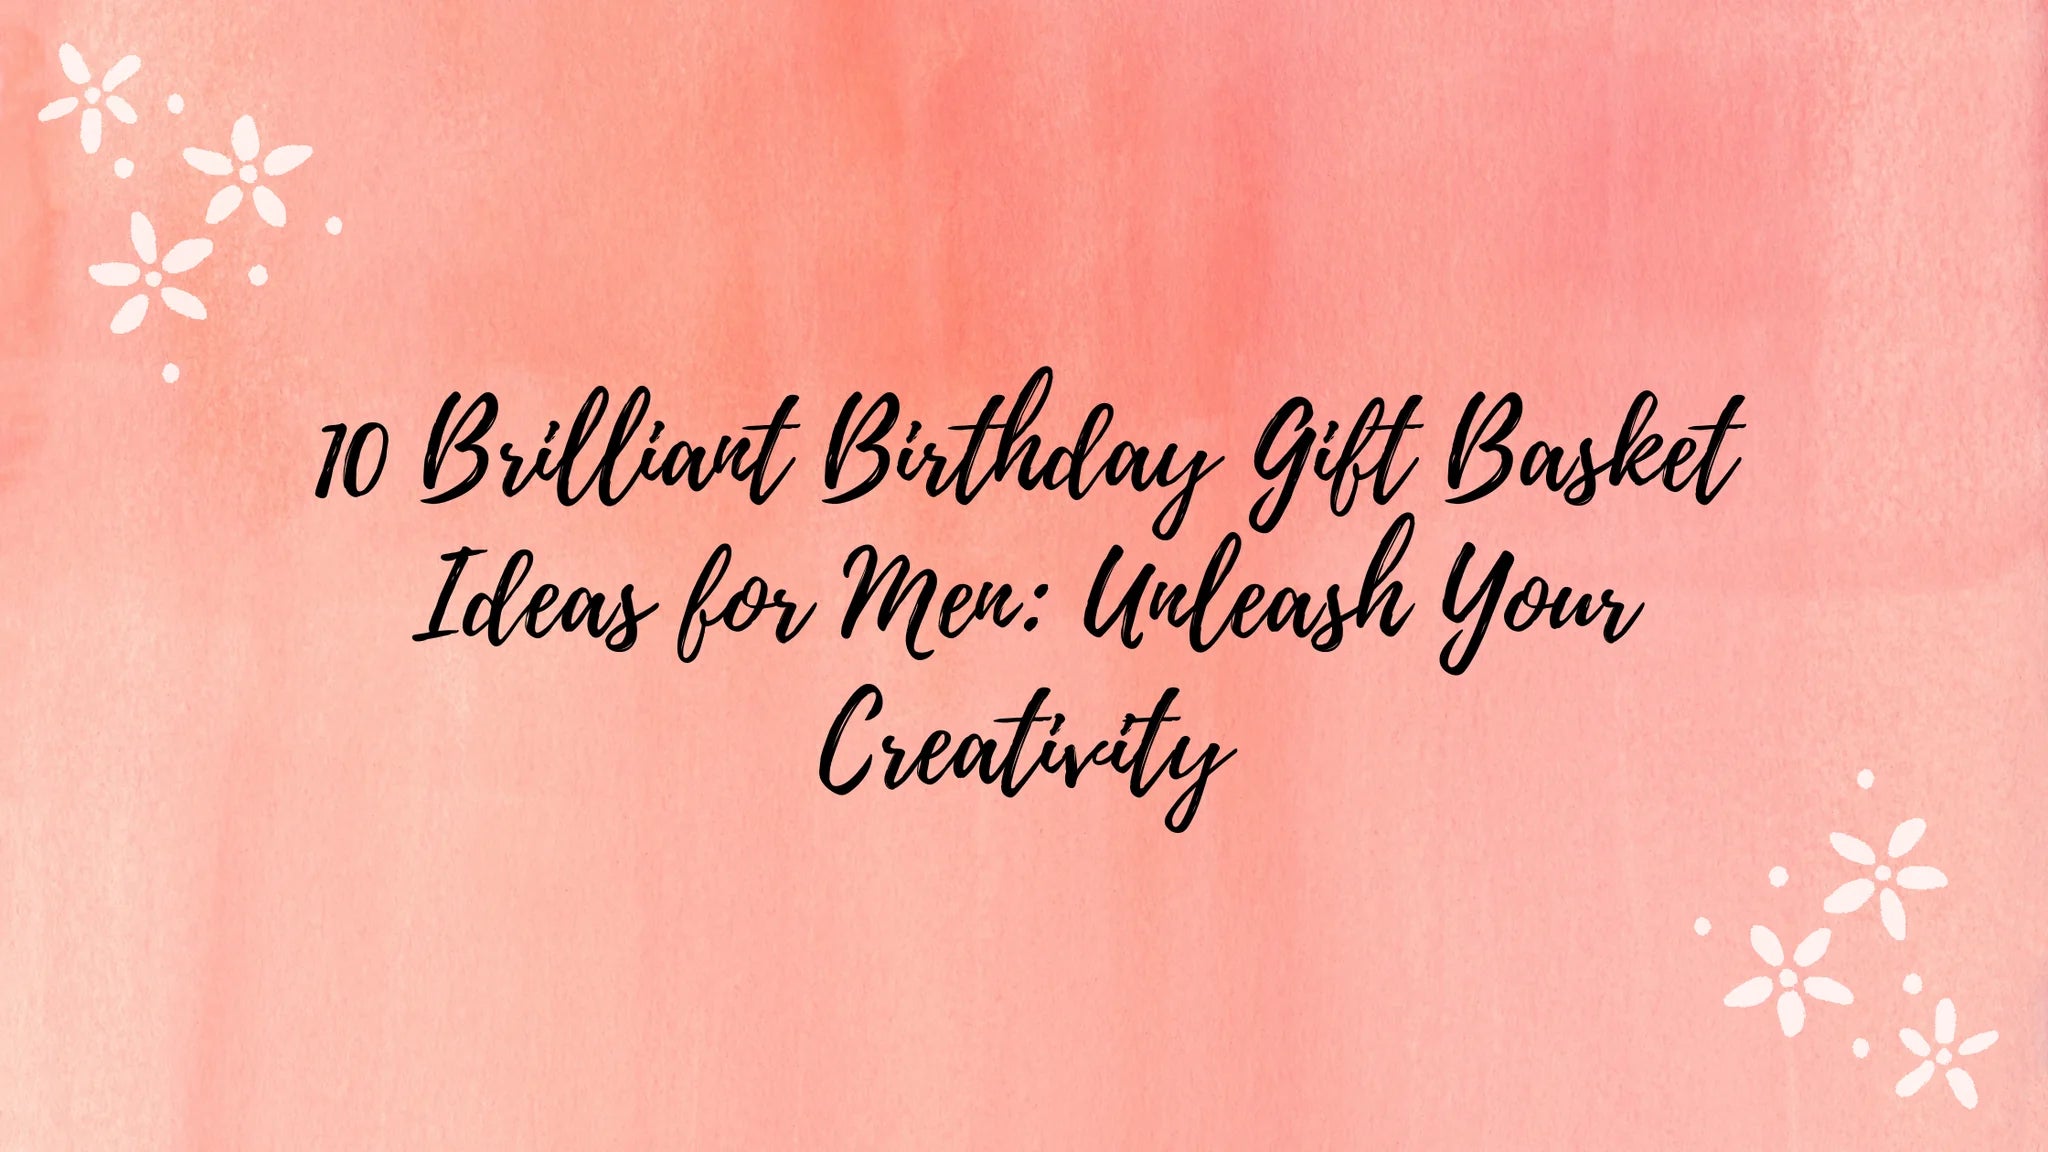 10 Brilliant Birthday Gift Basket Ideas for Men: Unleash Your Creativity